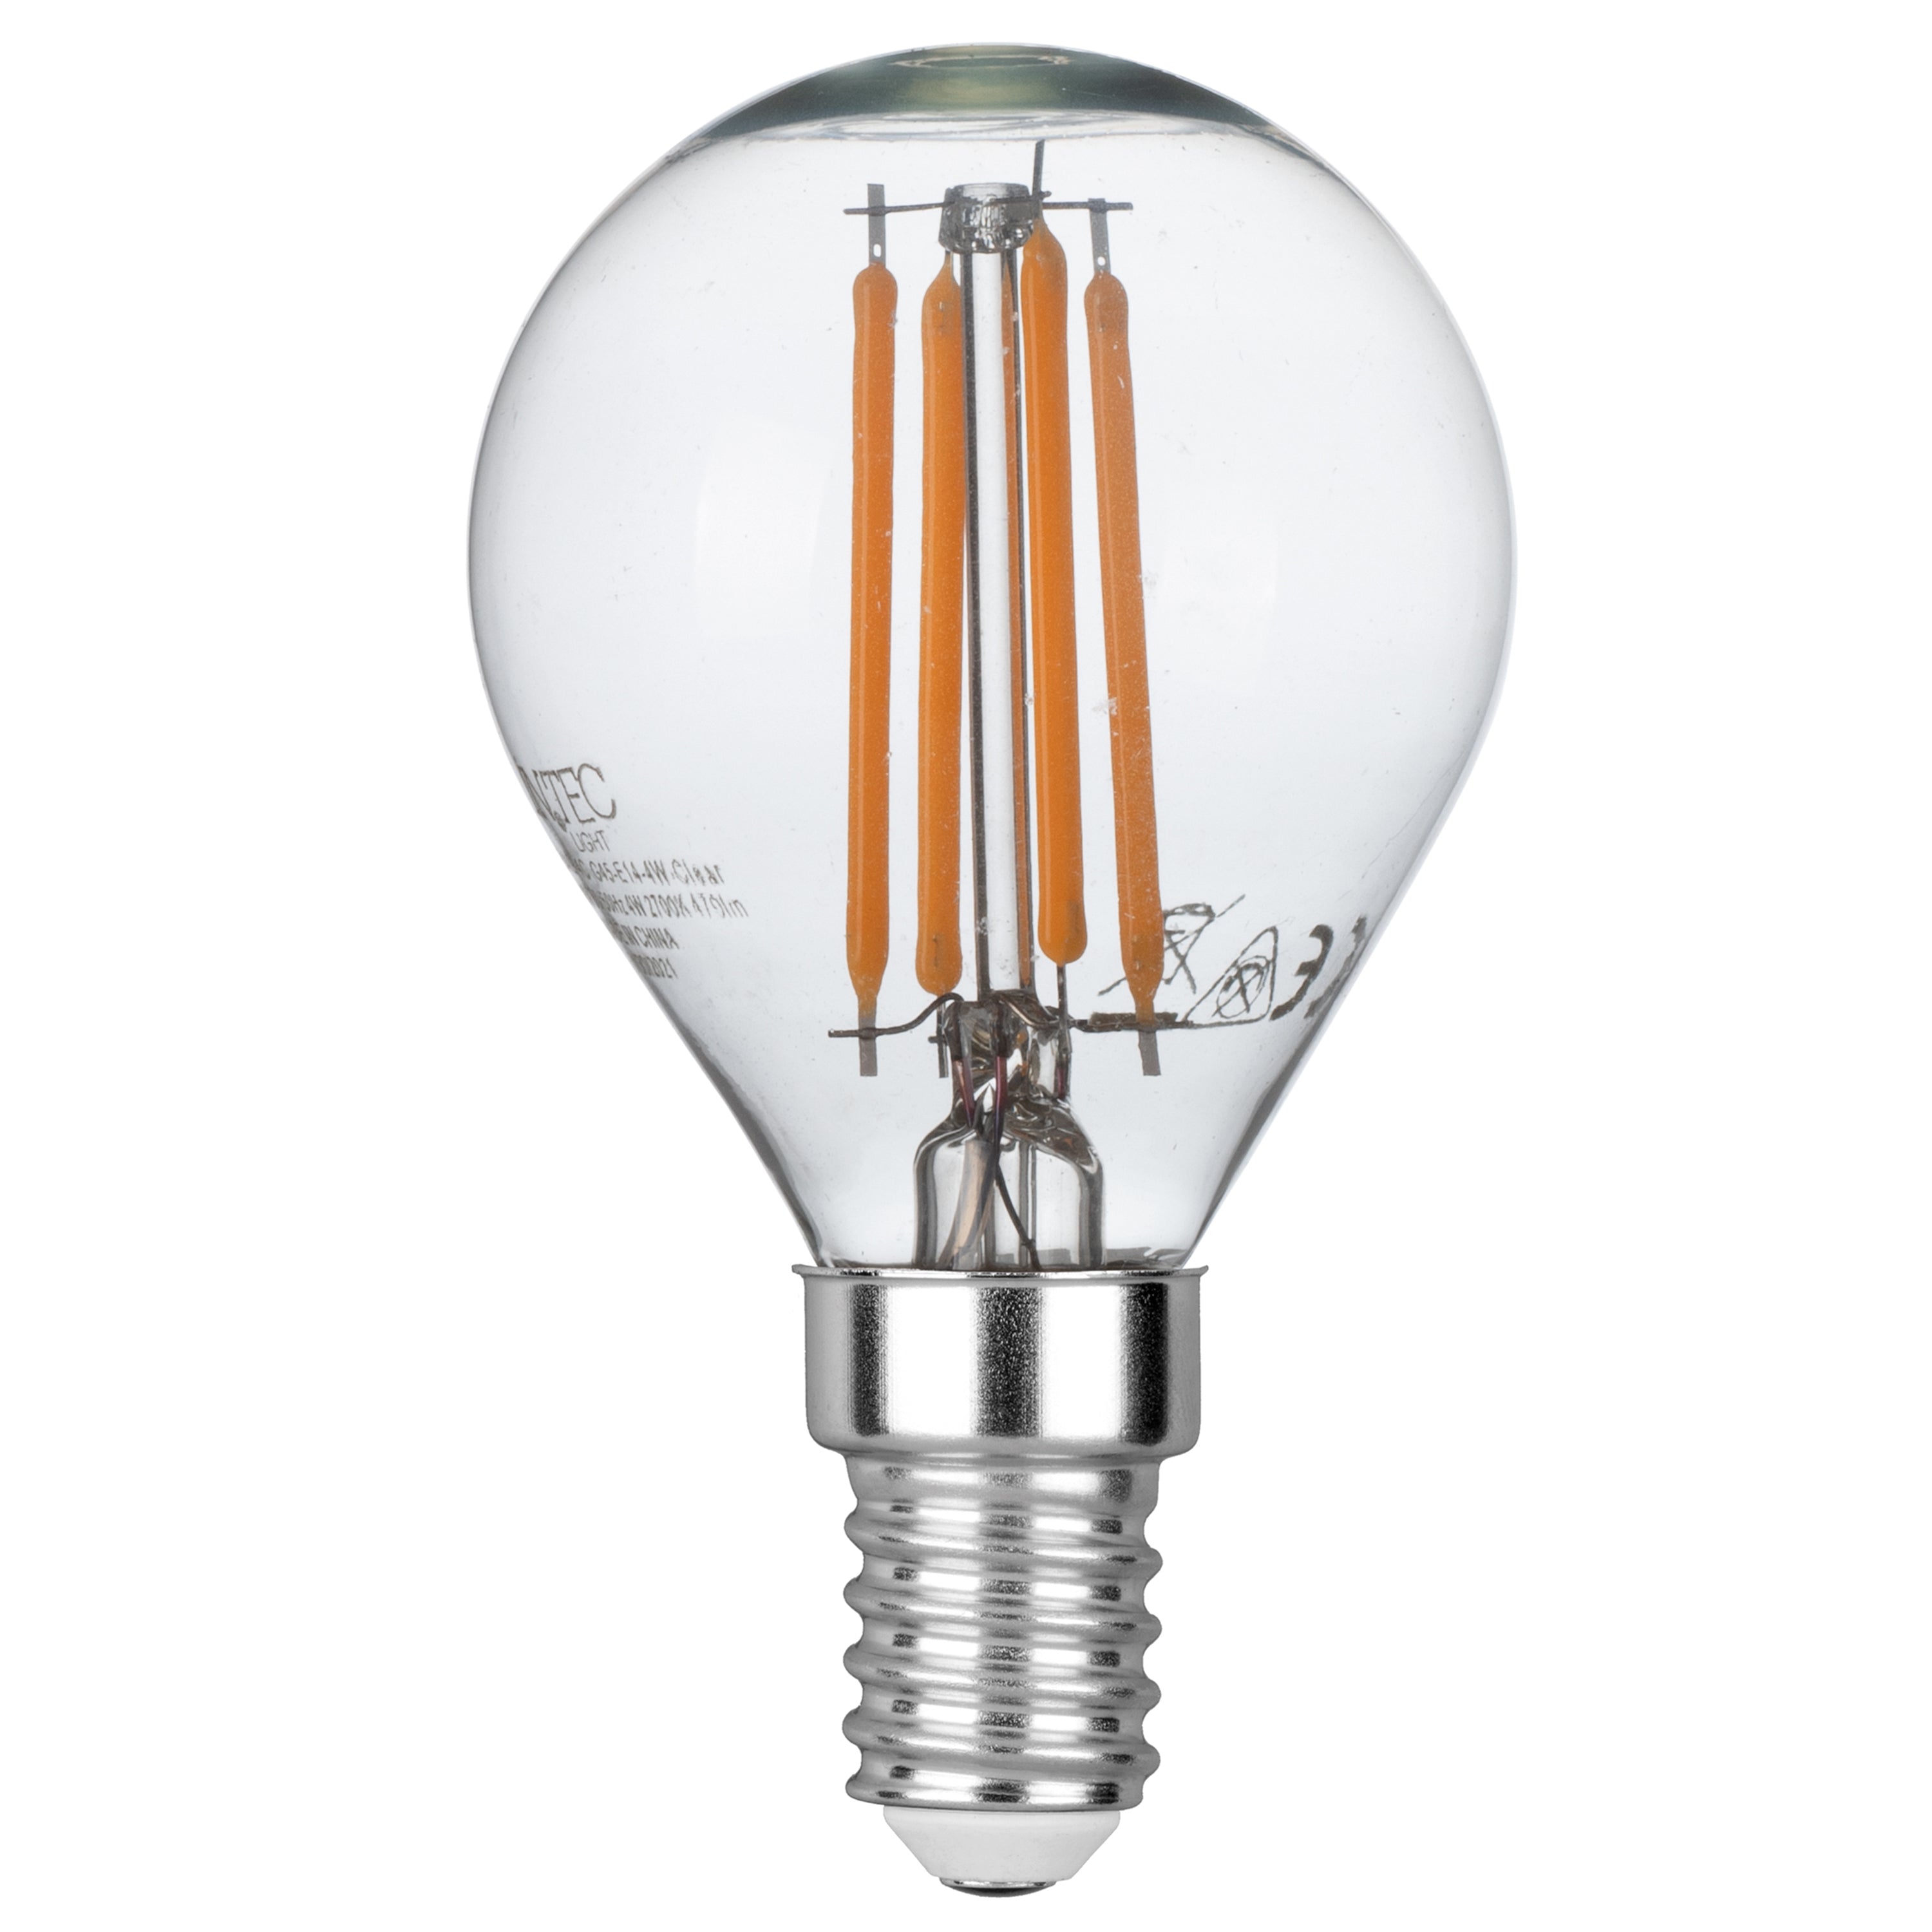 KIT de 3 ampoules LED globe filament E14 4W, 470 Lumen 4,5x7,8 cm. 